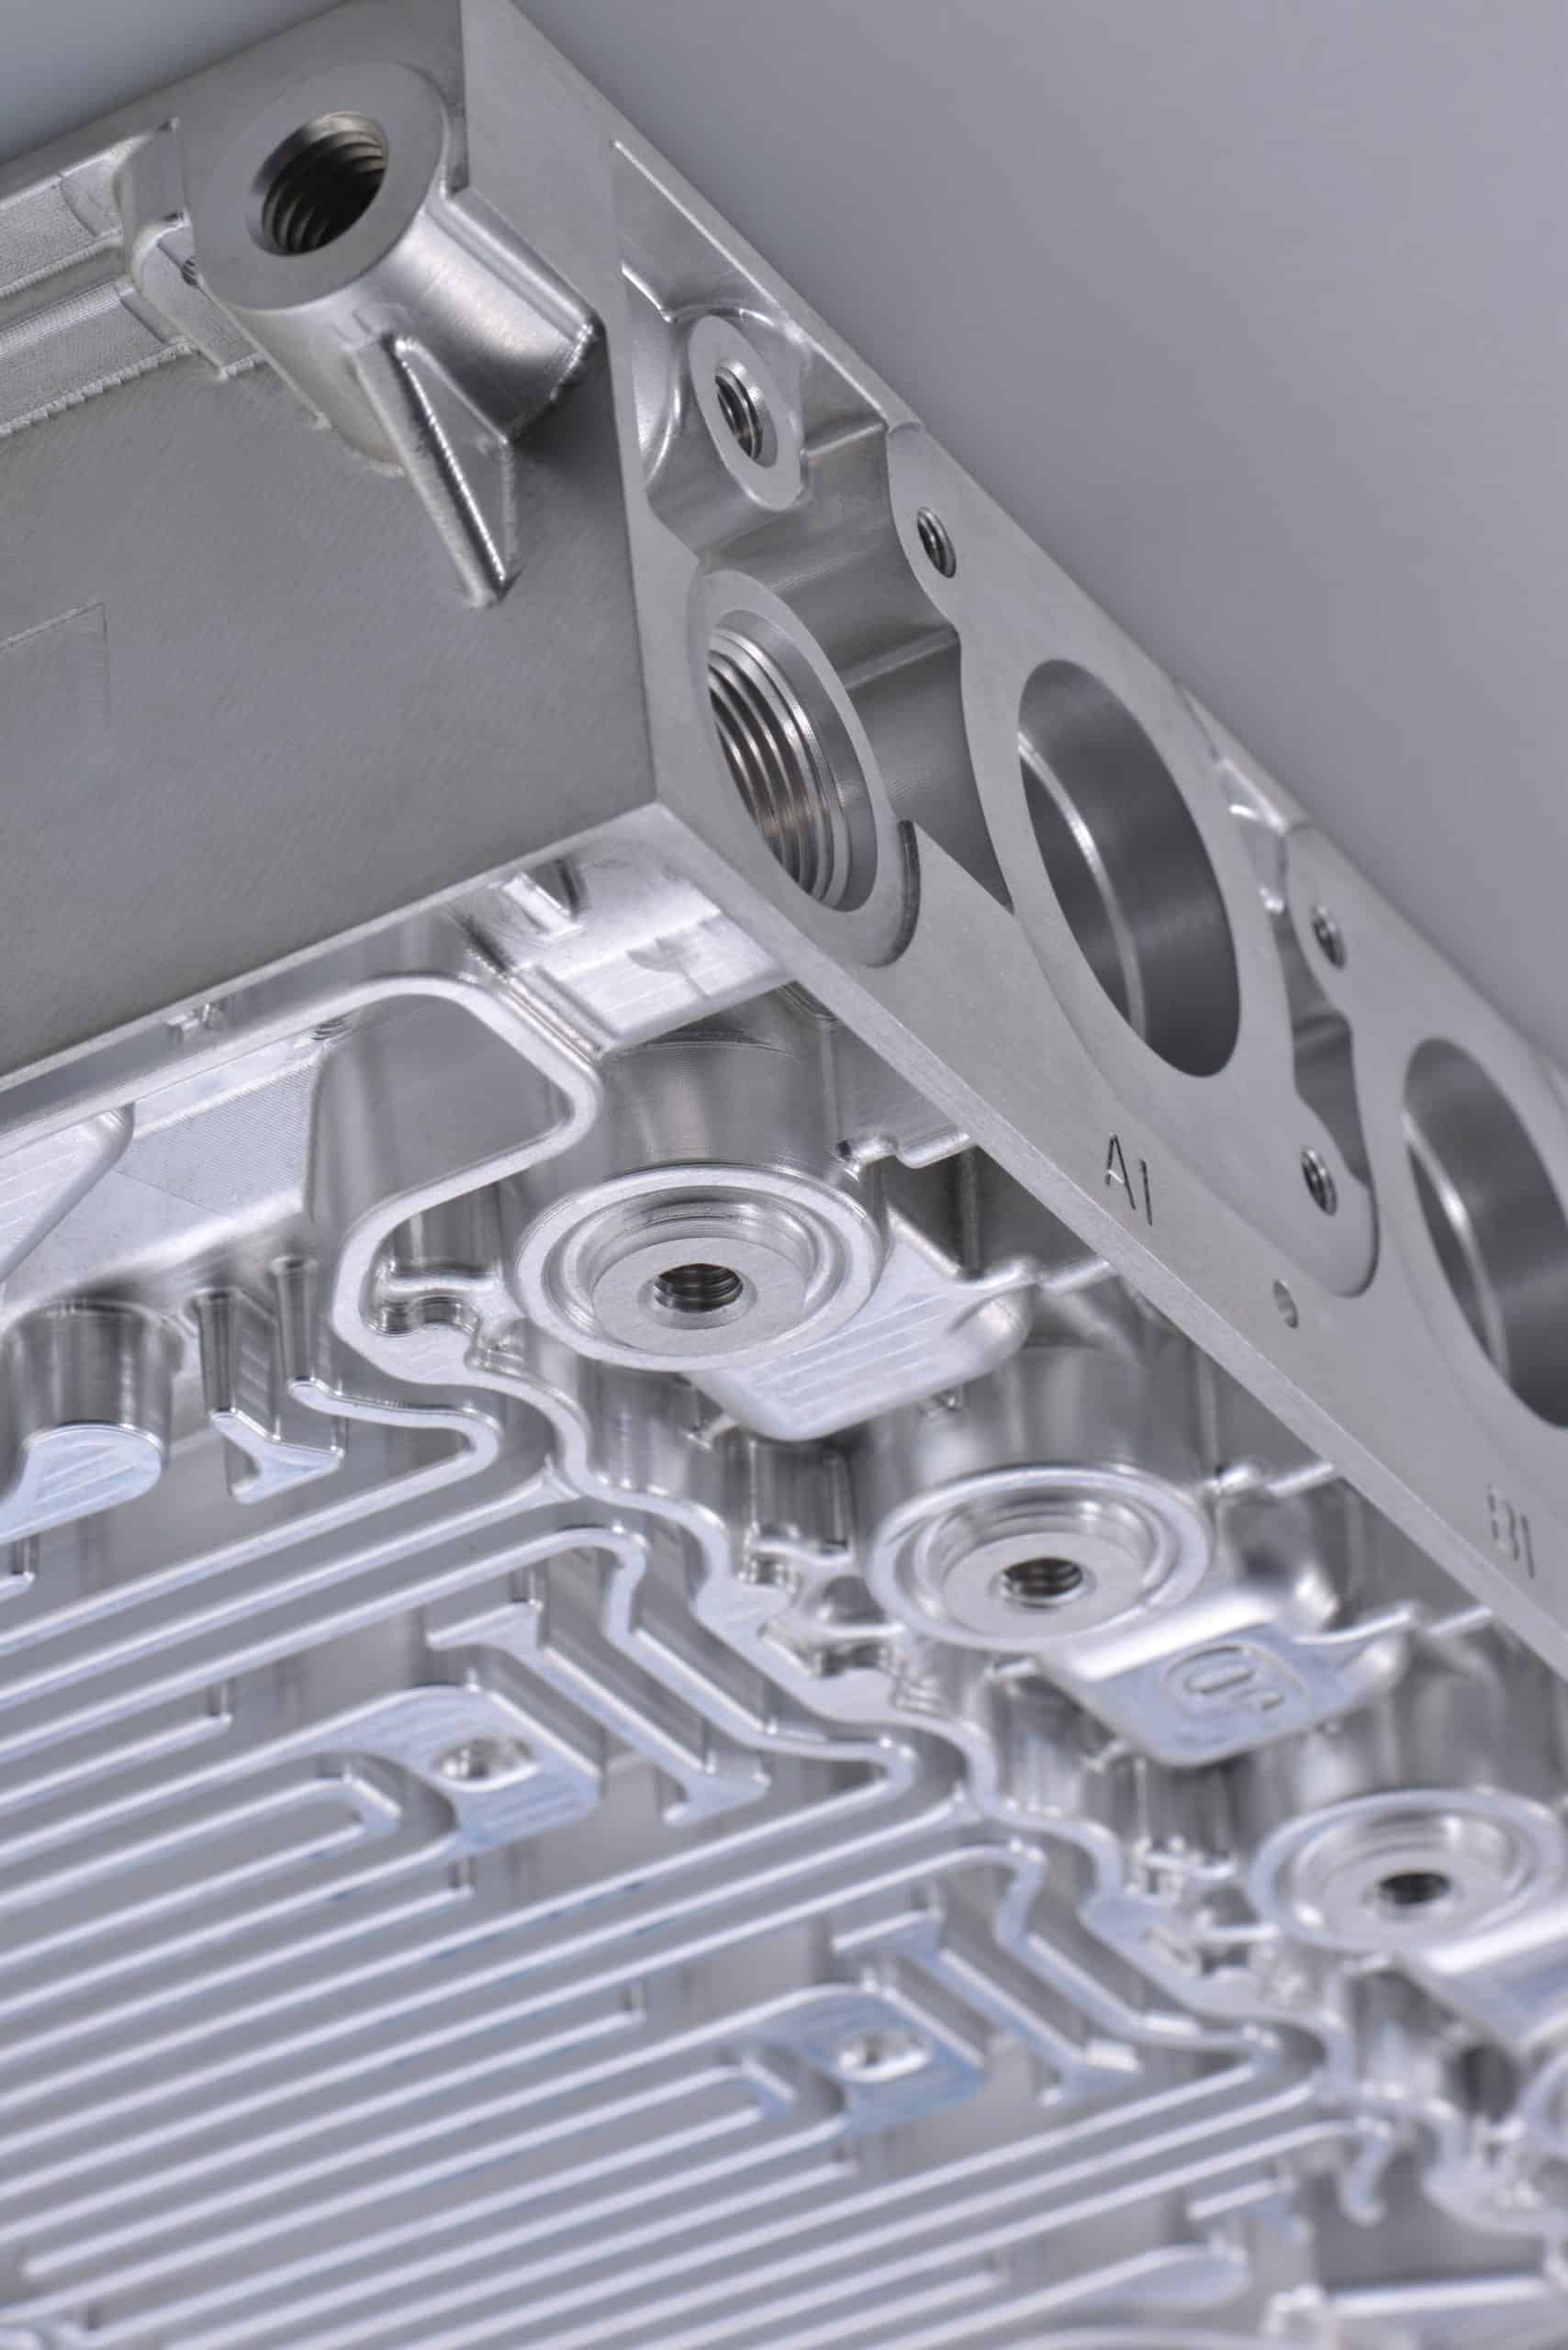 CNC Machining Parts Article Image